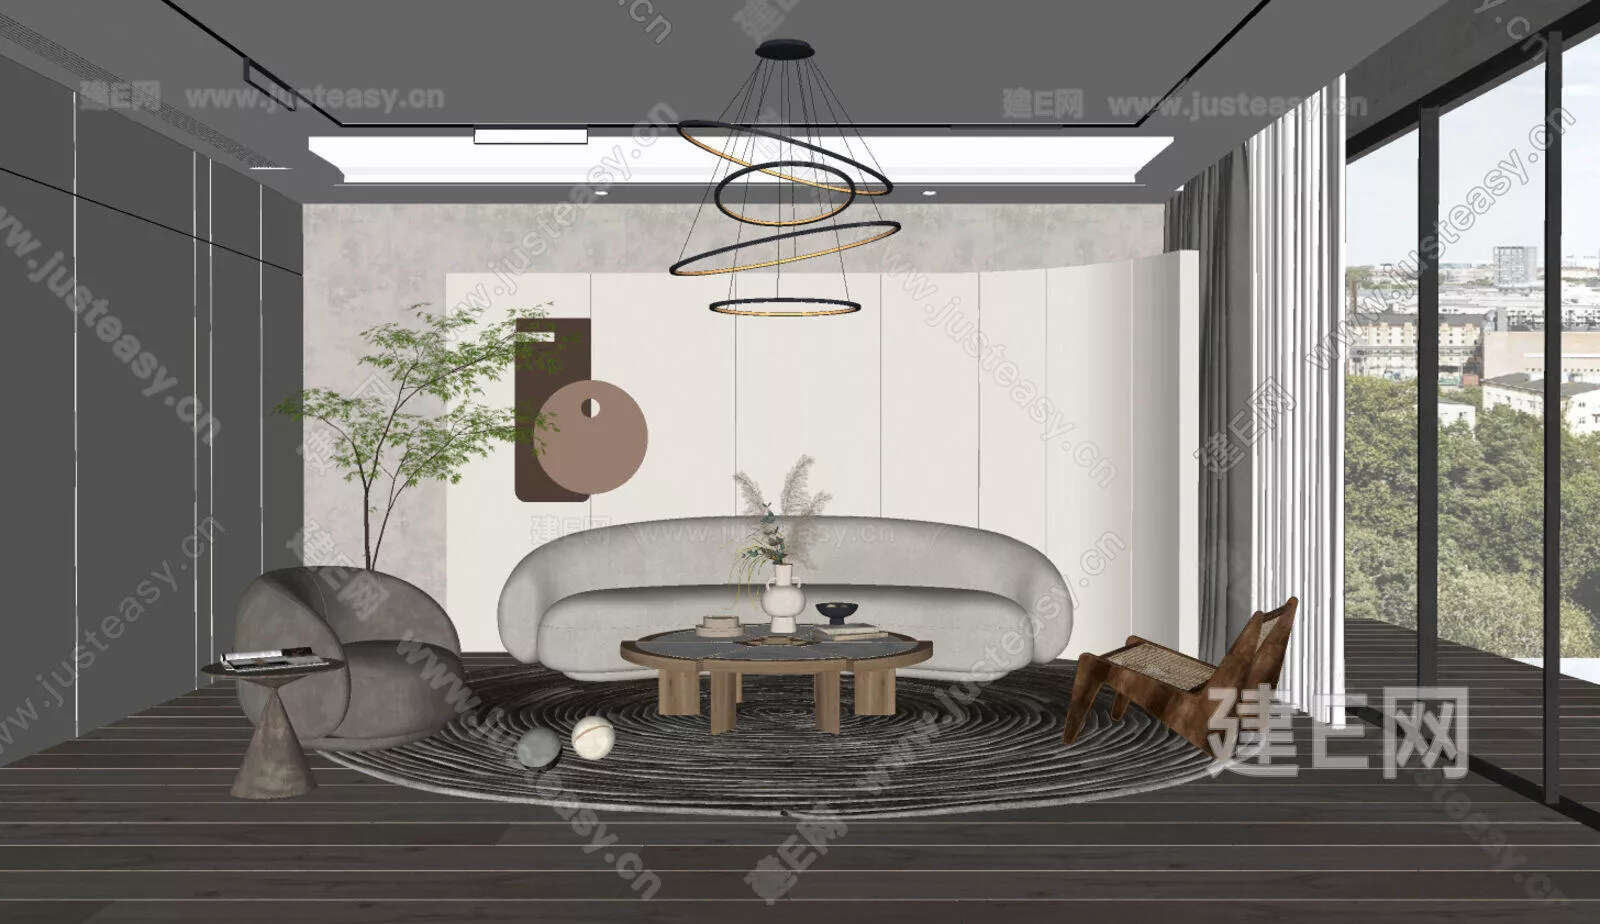 JAPANESE LIVING ROOM - SKETCHUP 3D SCENE - ENSCAPE - 105333801